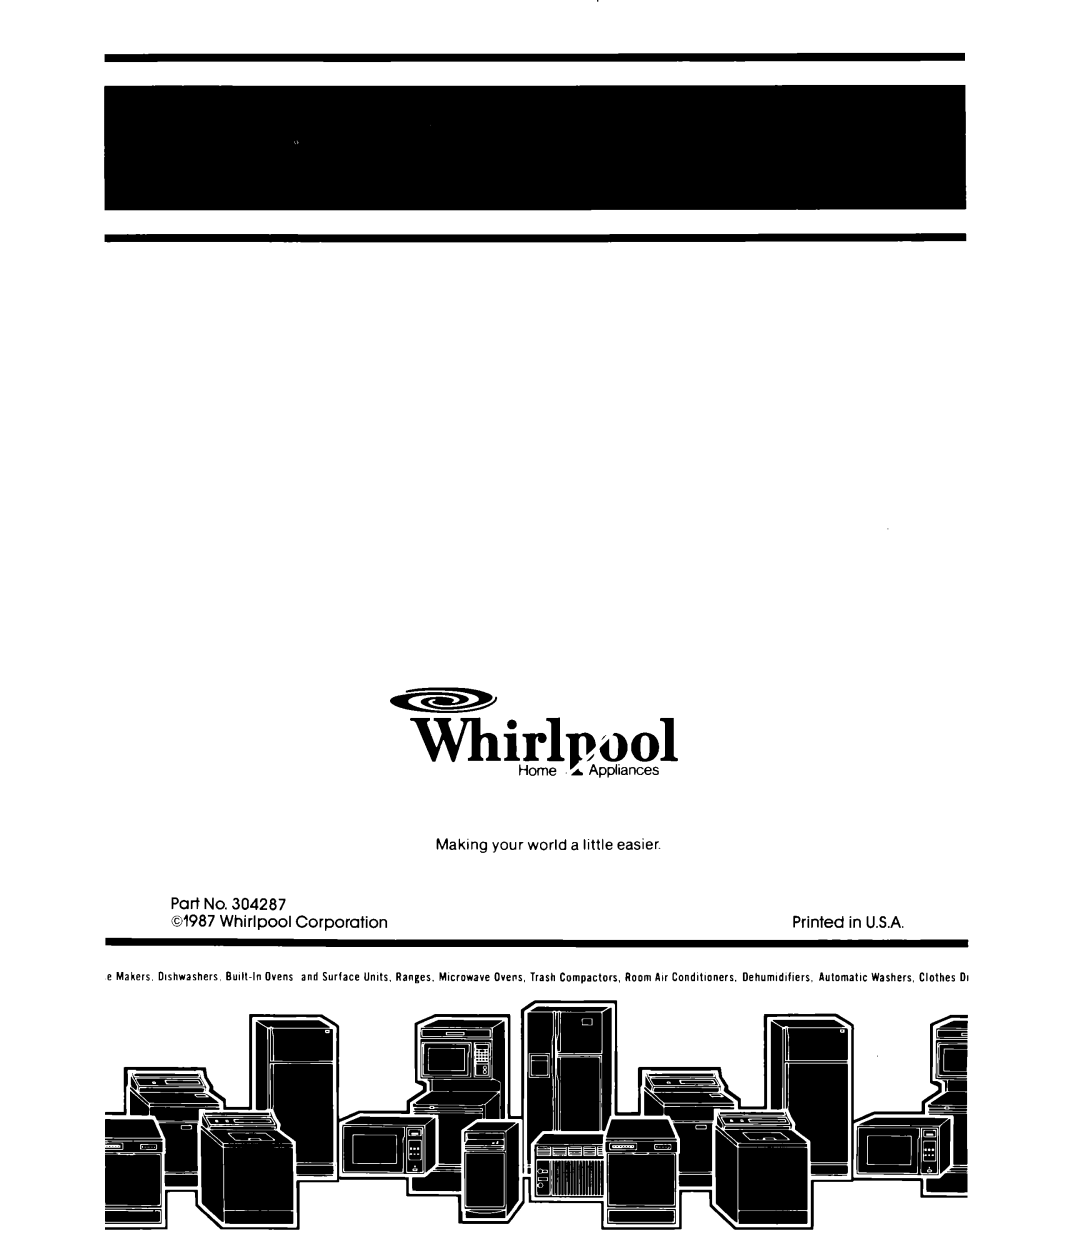 Whirlpool DP4800XS manual Whirlpool, A /Appliances, Making, a little, easier, 01987, Corporation 